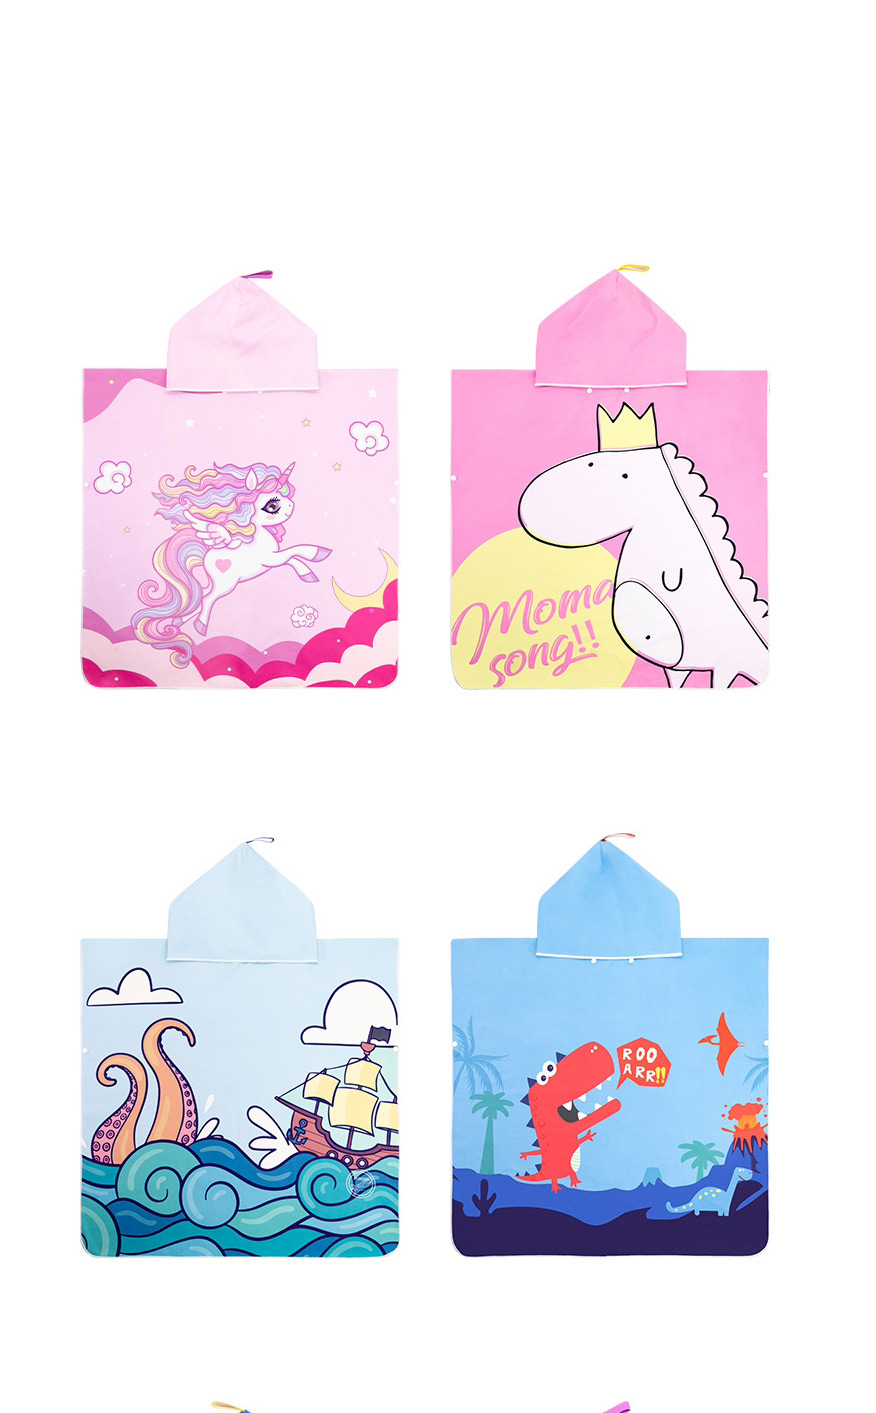 Fashion Octopus Pirate Microfiber Cartoon Print Childrens Hooded Bath Towel,Kids Swimwear